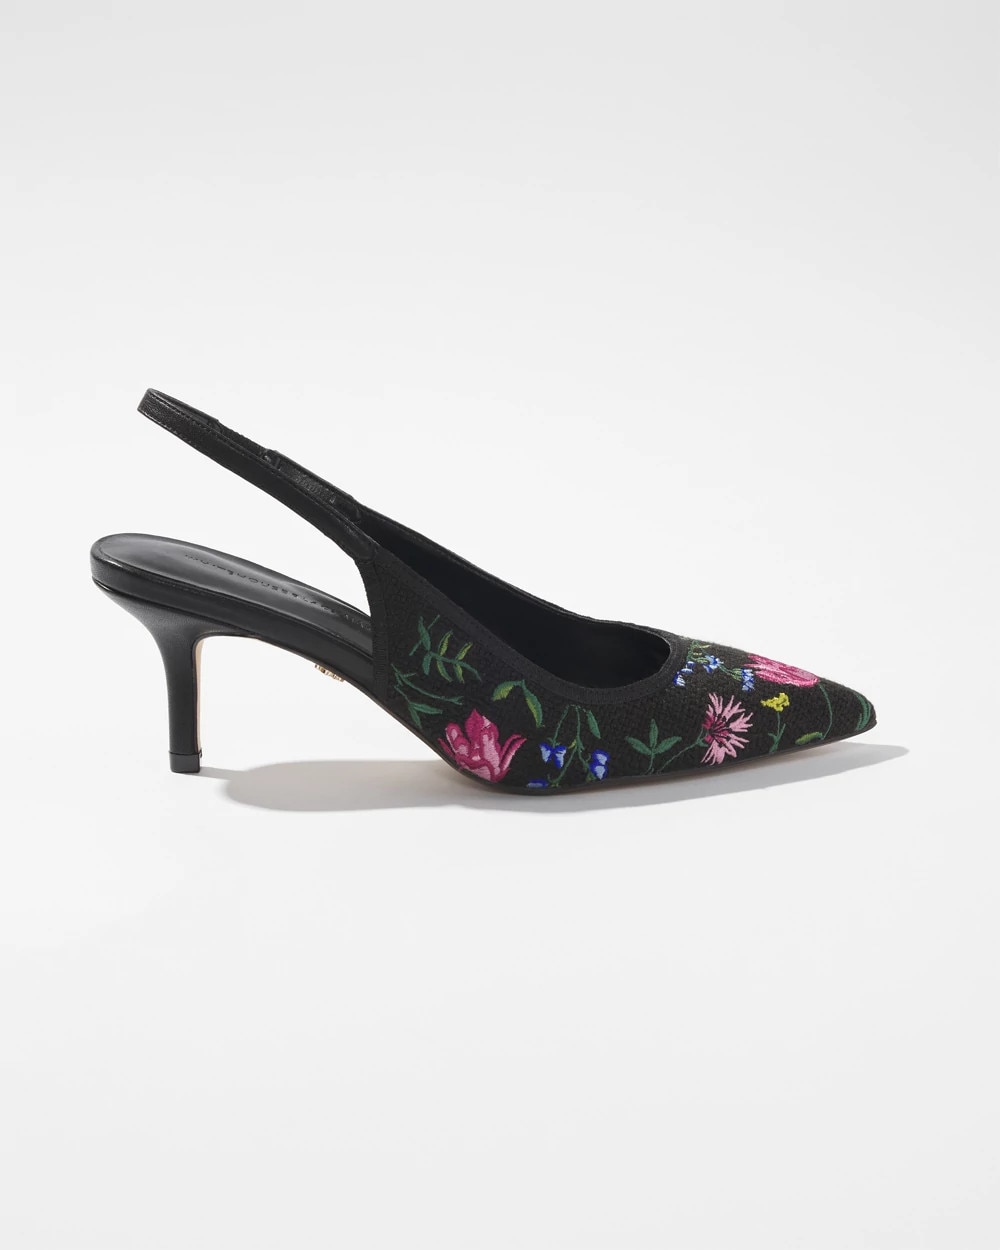 Dolce & Gabbana Floral Print Crystal Embellishments D'Orsay Pumps - Black  Pumps, Shoes - DAG428316 | The RealReal